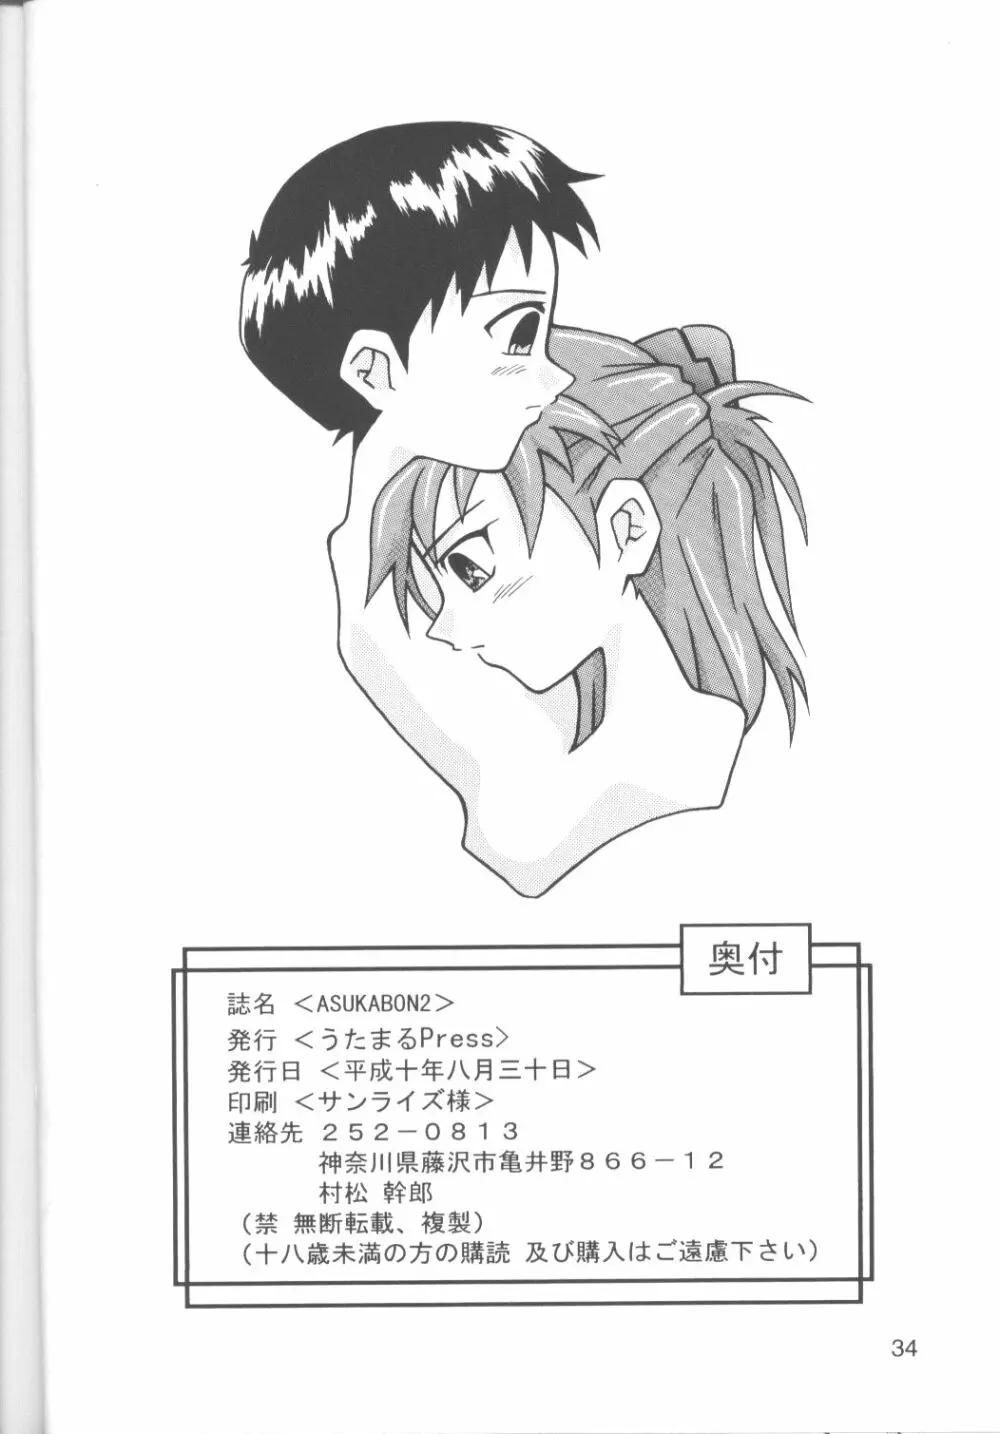 Asuka-bon 2 33ページ